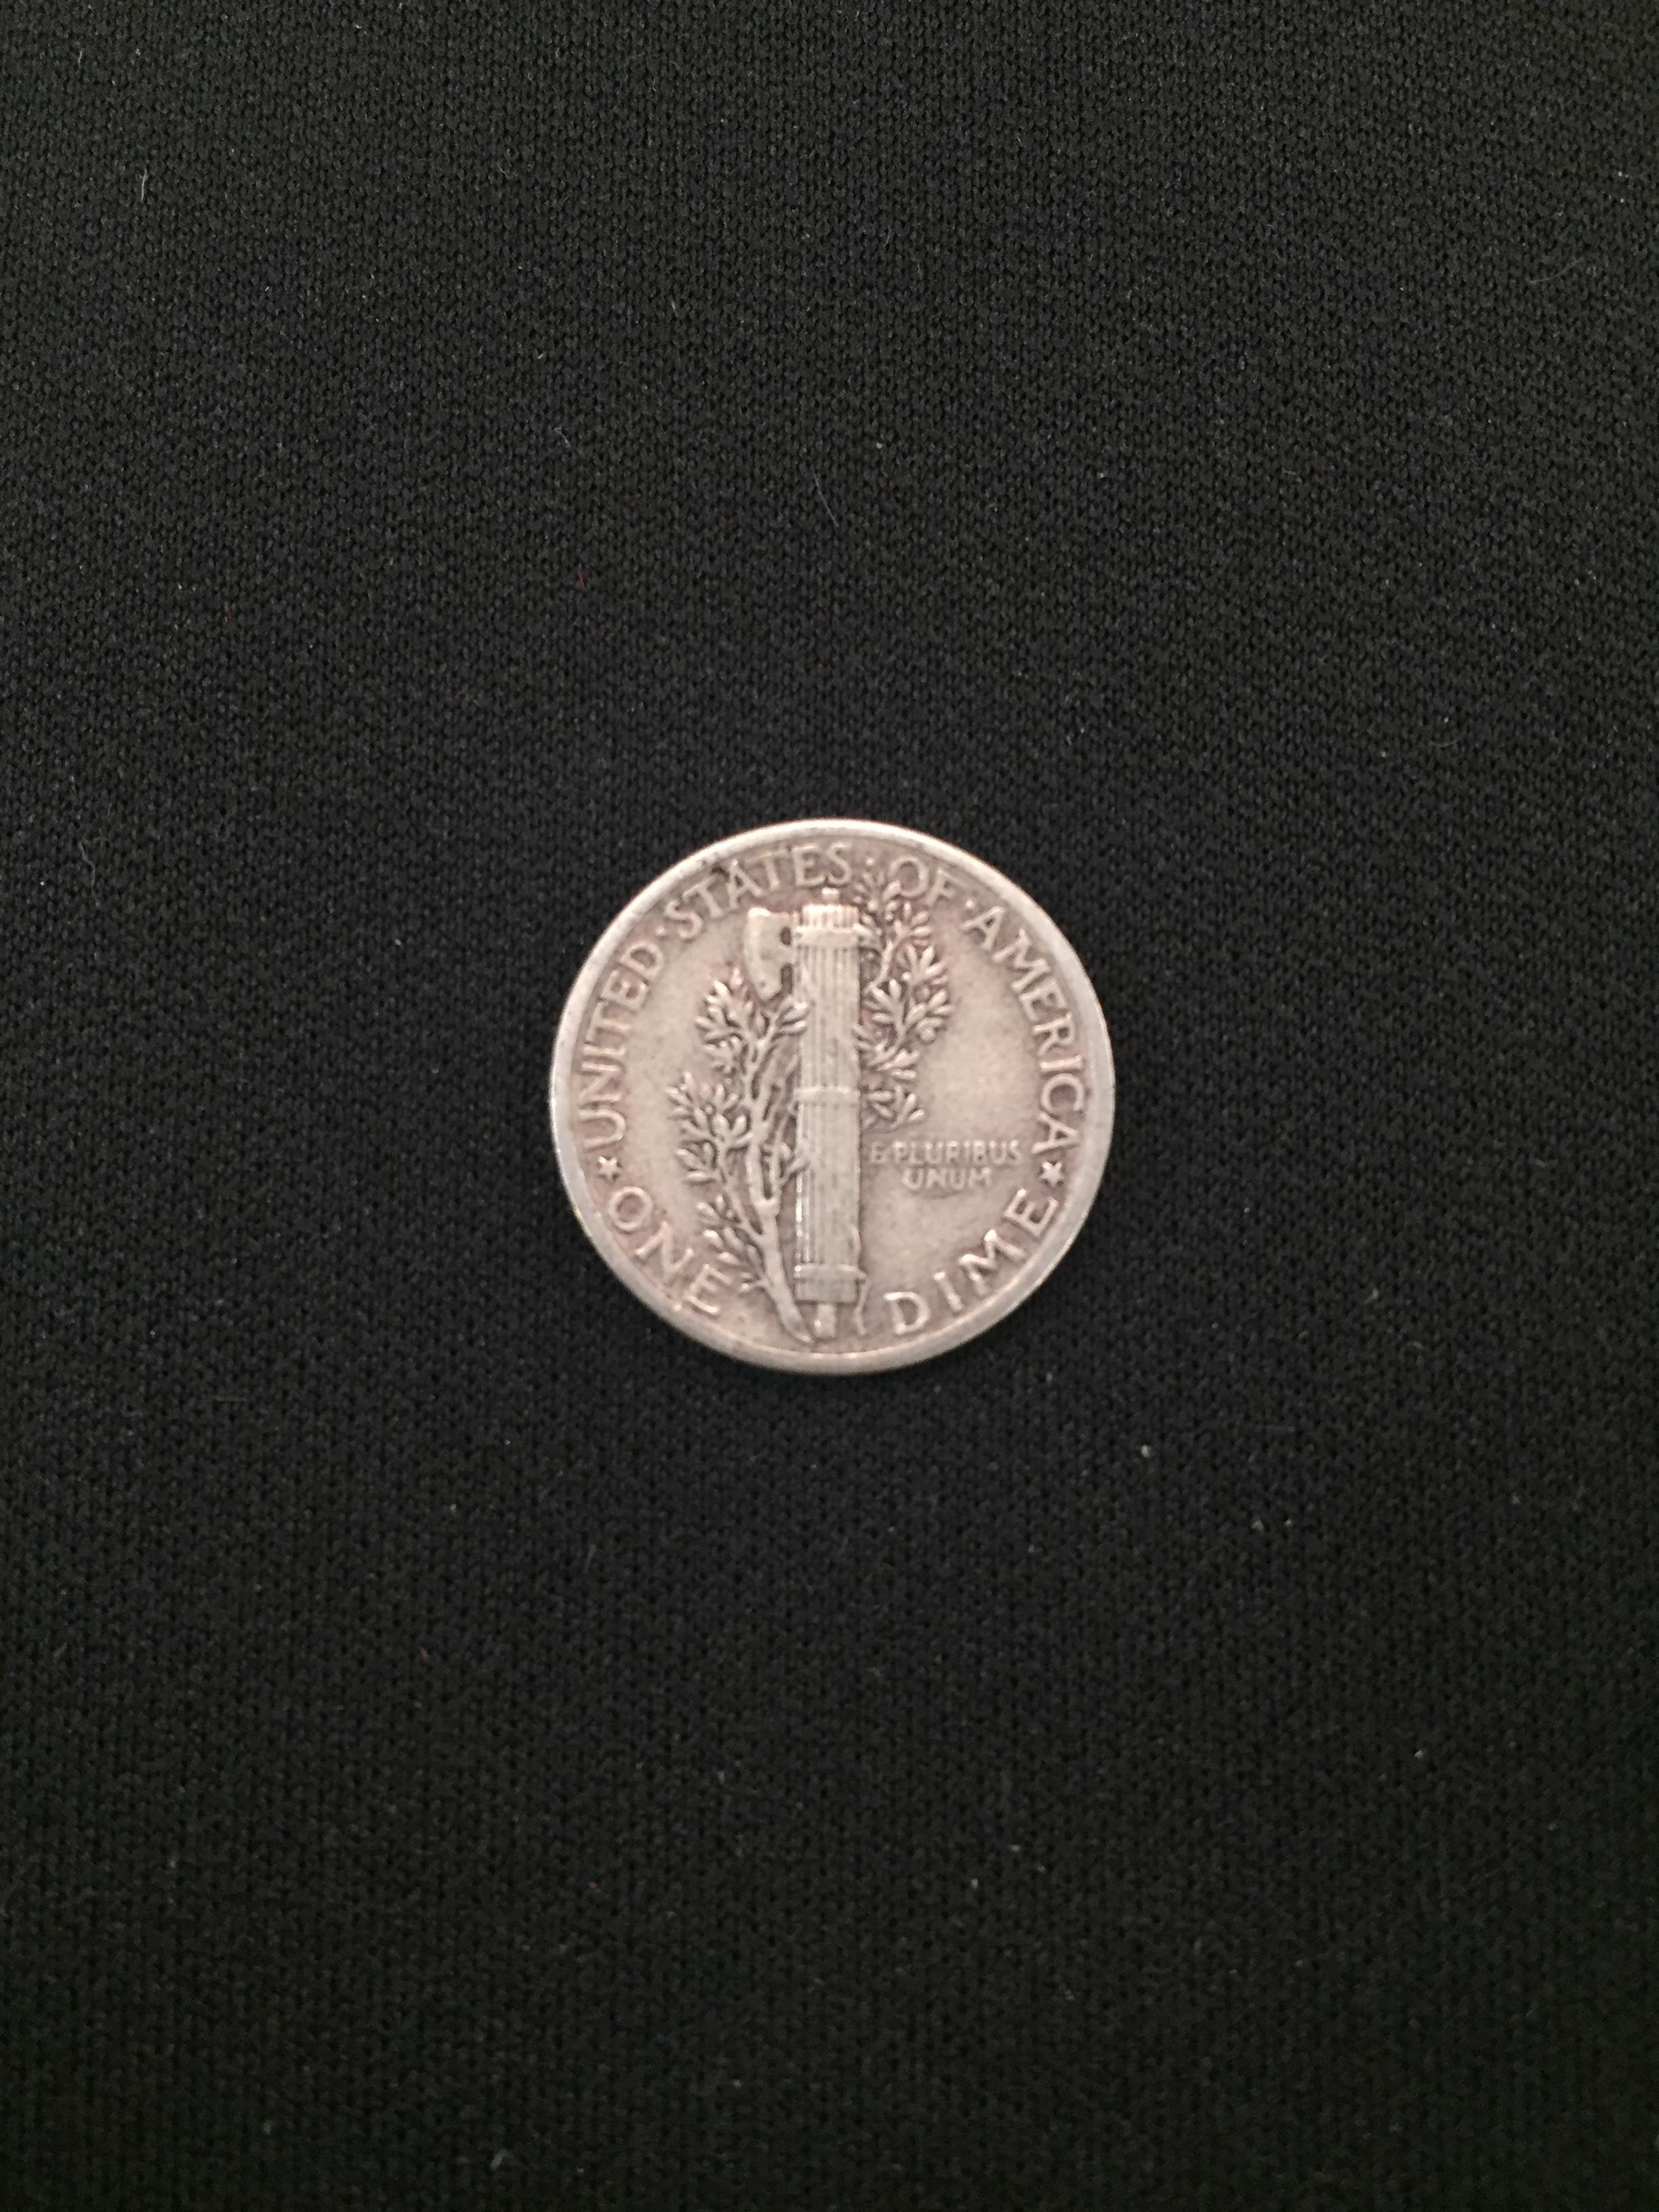 1942-United States Mercury Dime - 90% Silver Coin